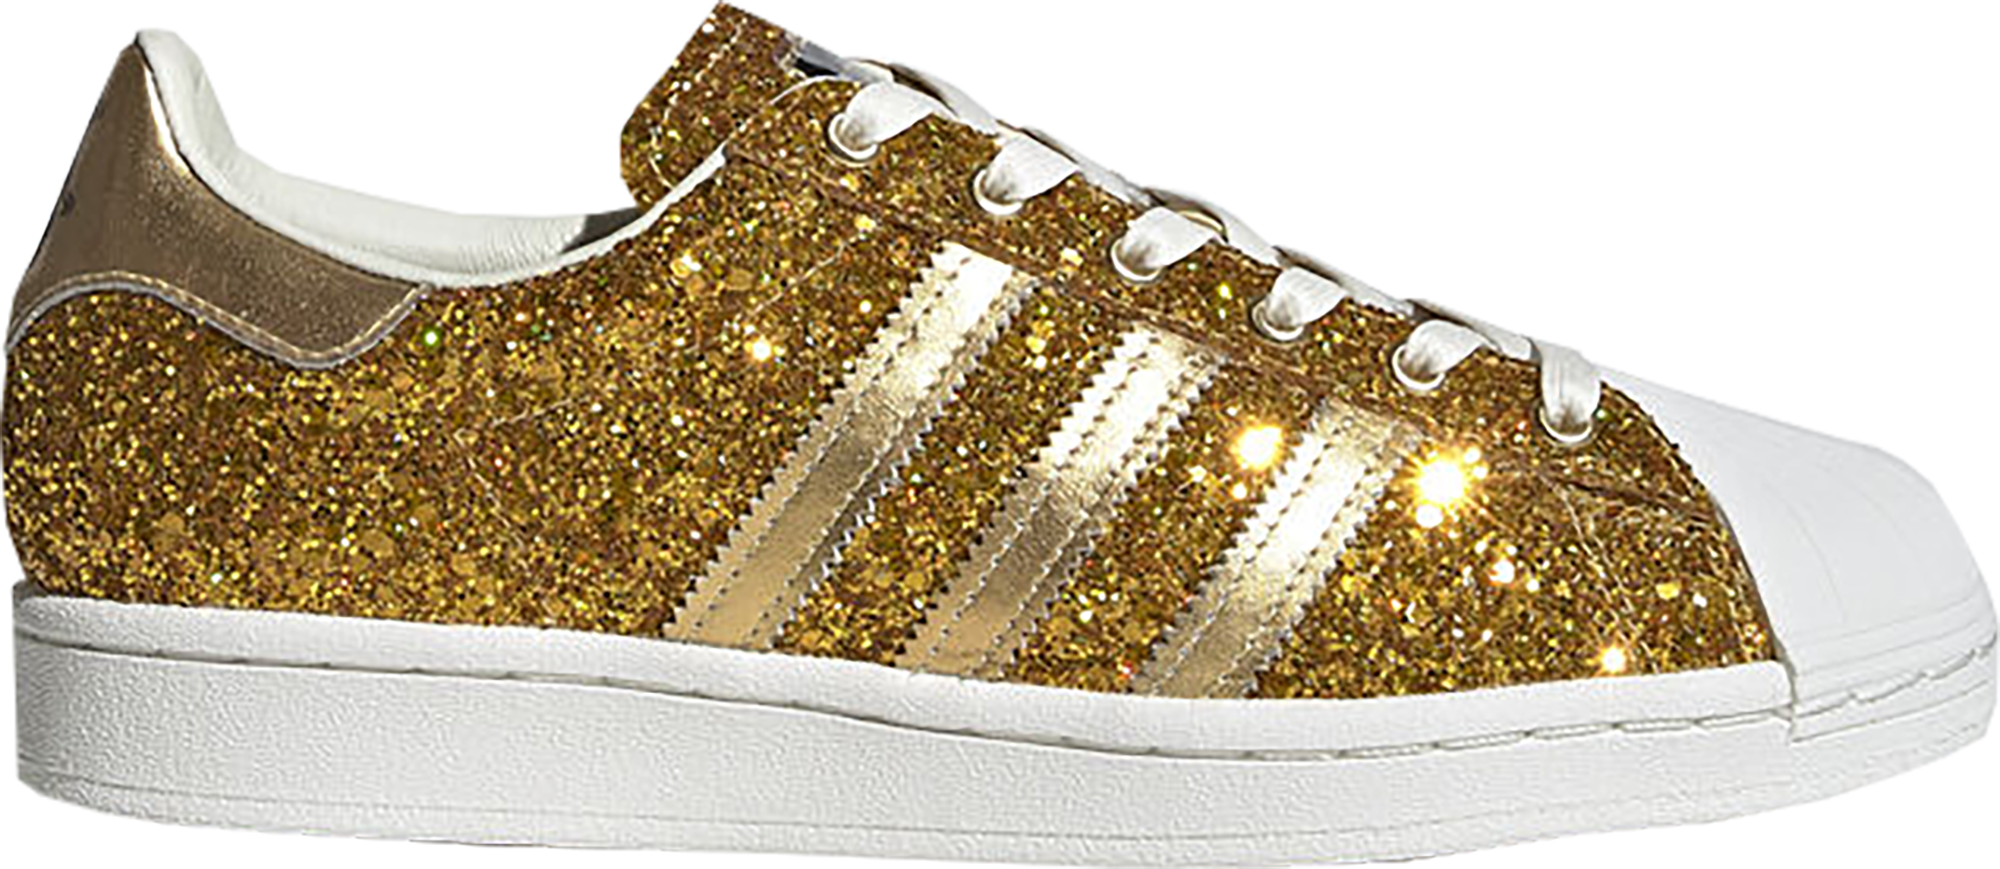 adidas superstar iridescent gold